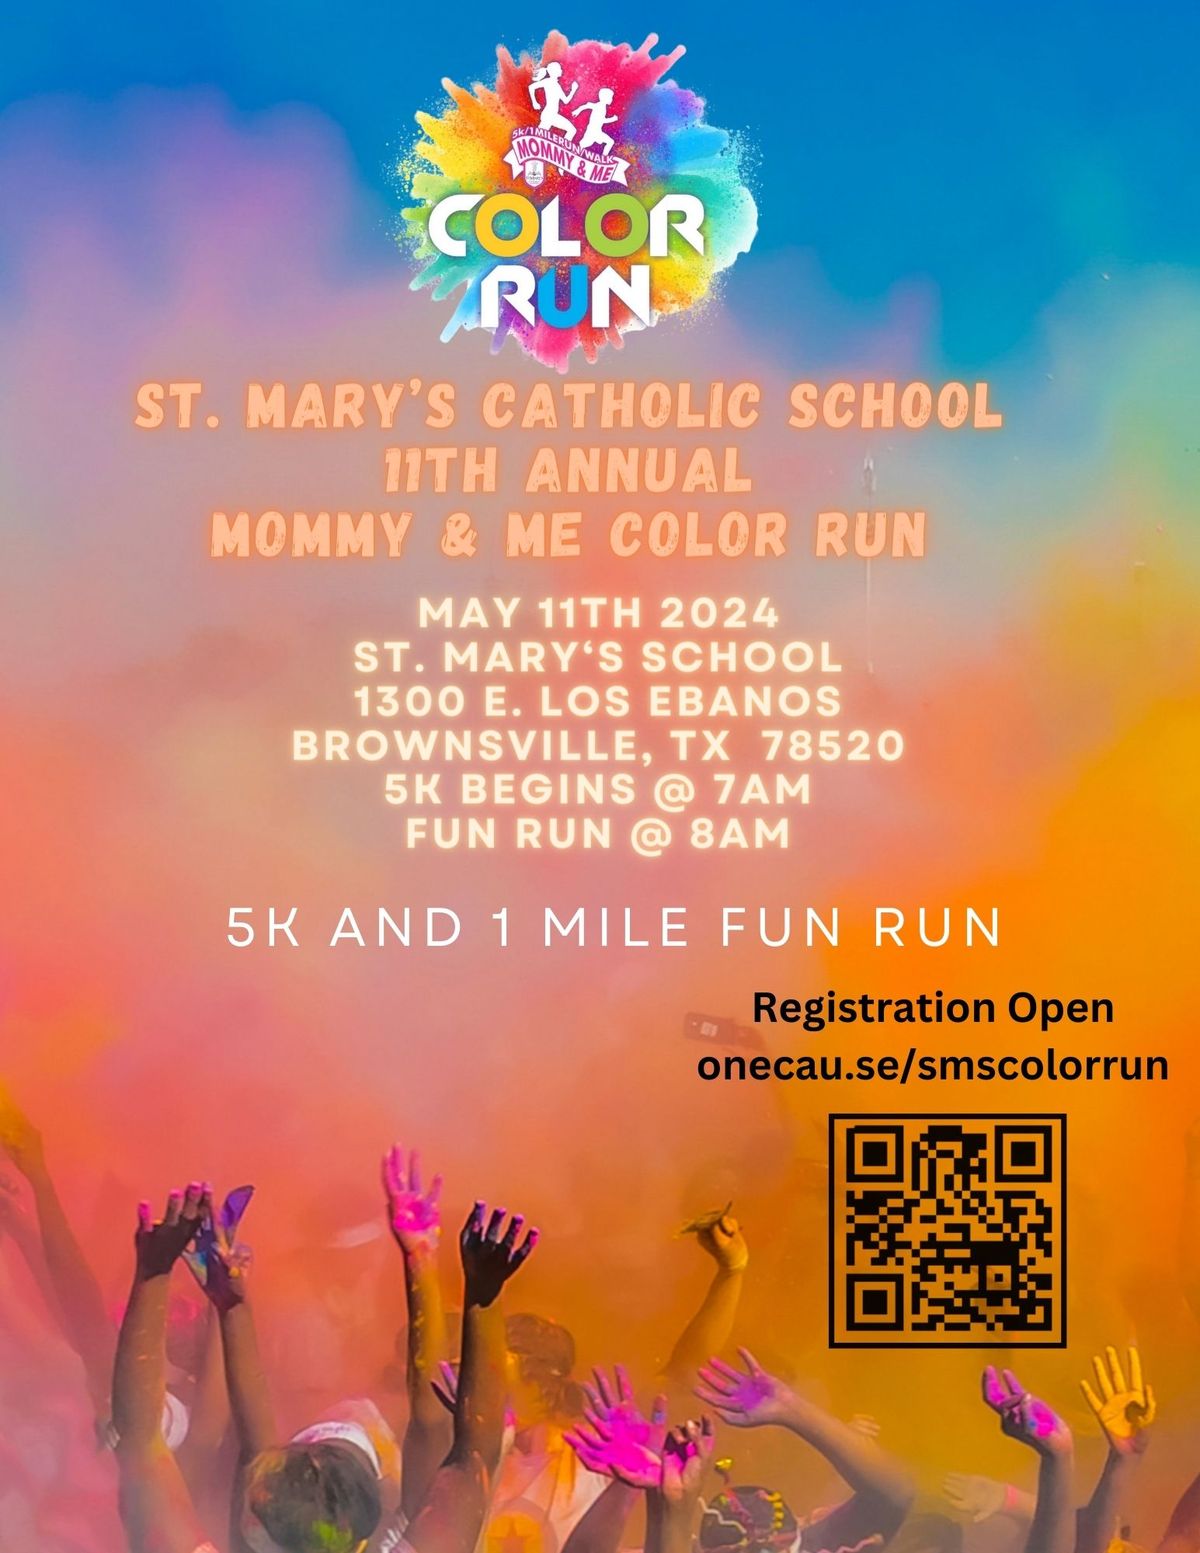 Mommy & Me Color Run-St. Mary's Catholic School